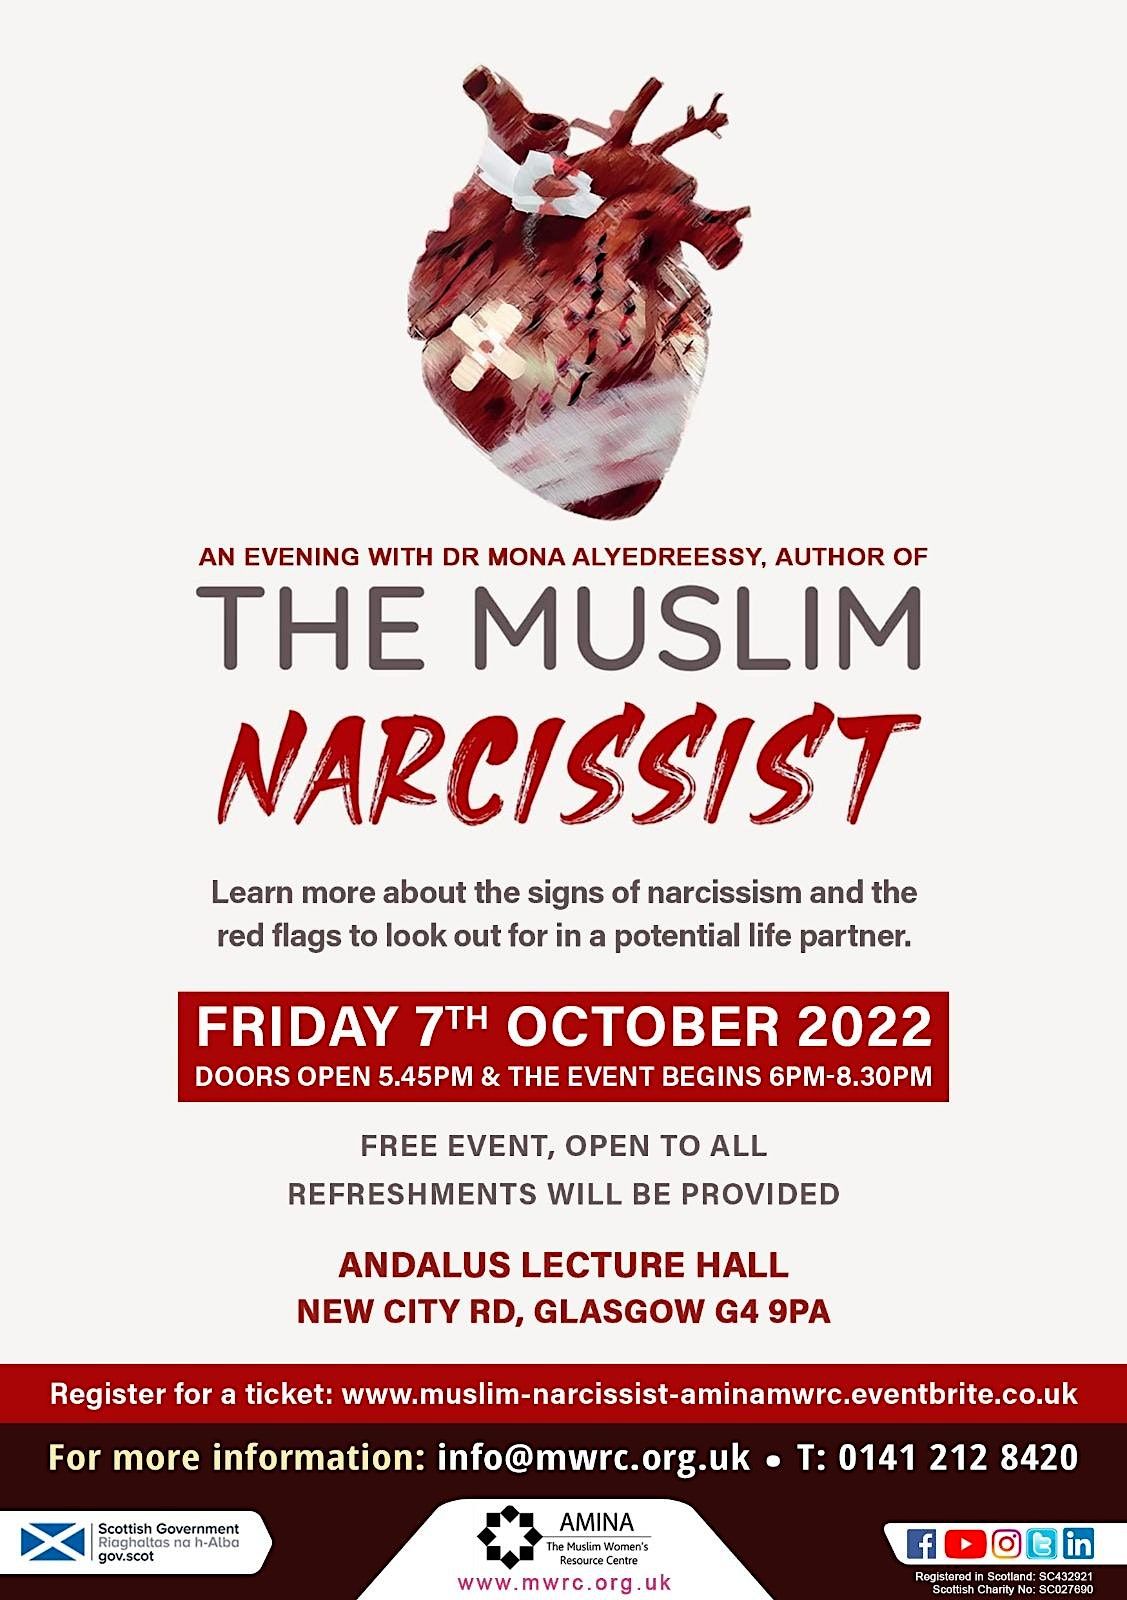 The Muslim Narcissist